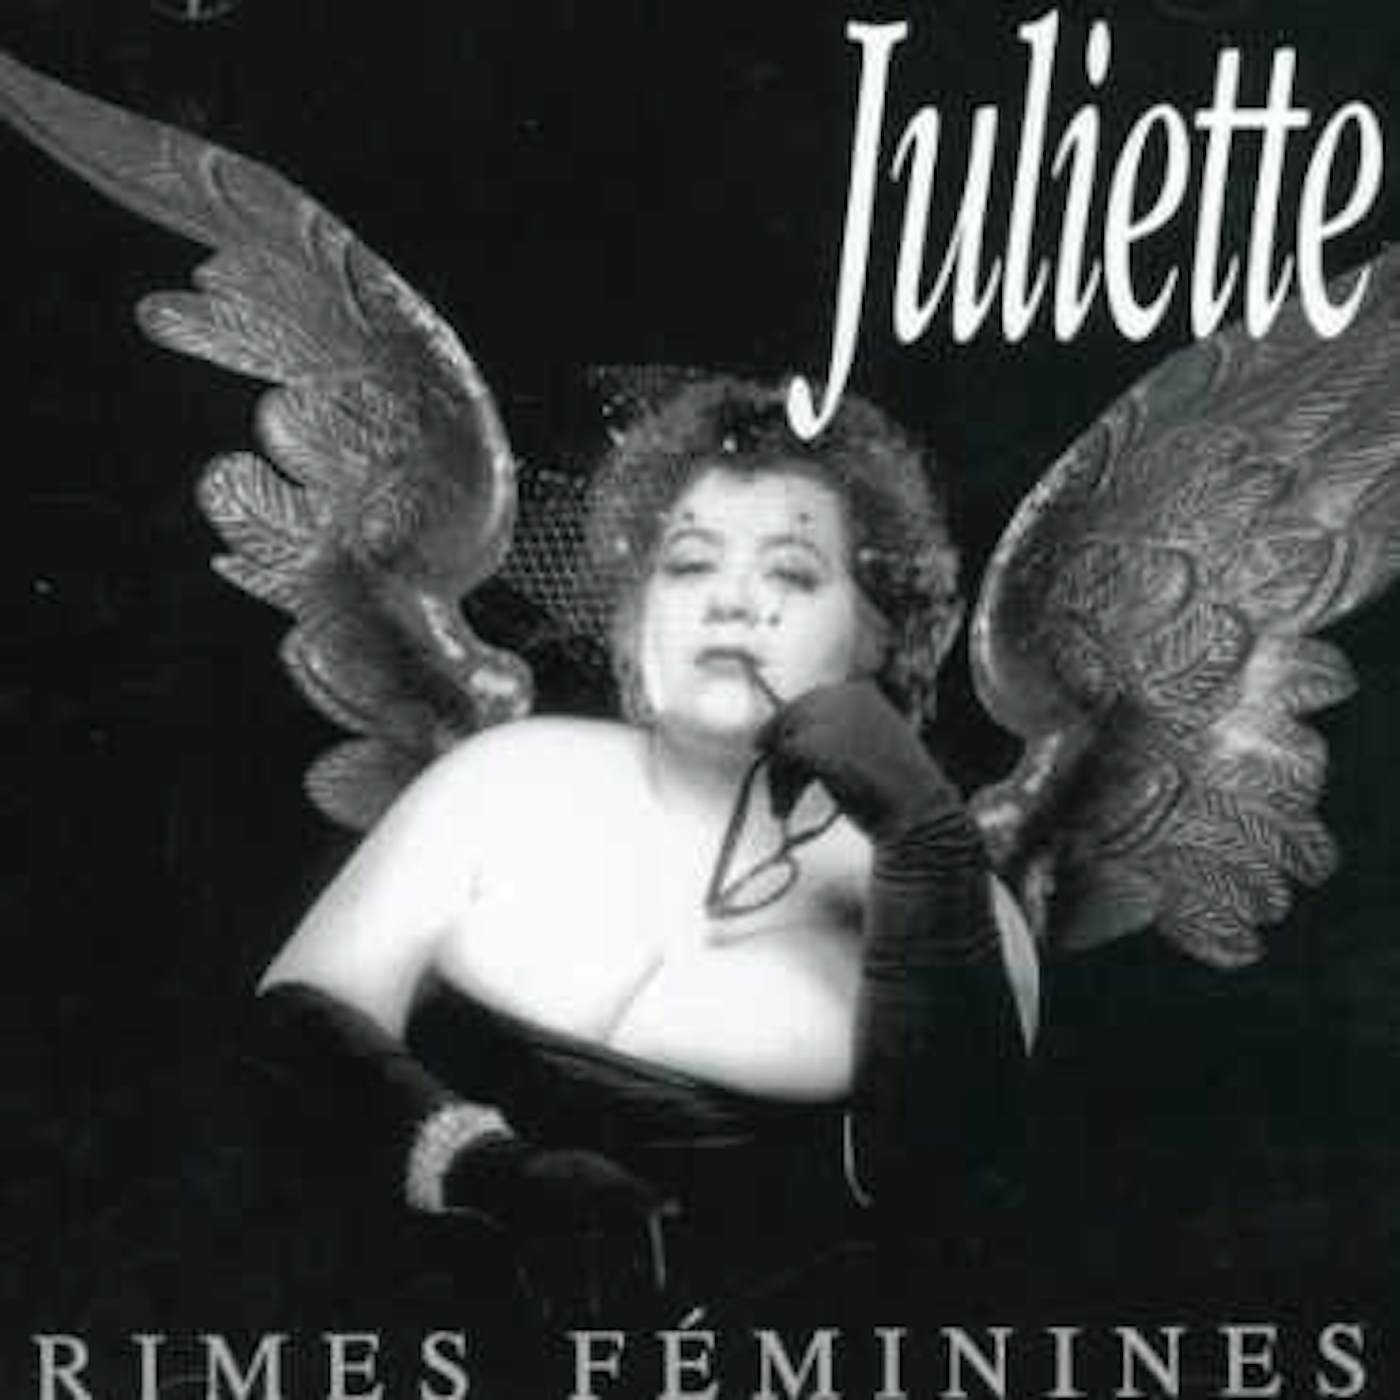 Juliette RIMES FEMININES CD